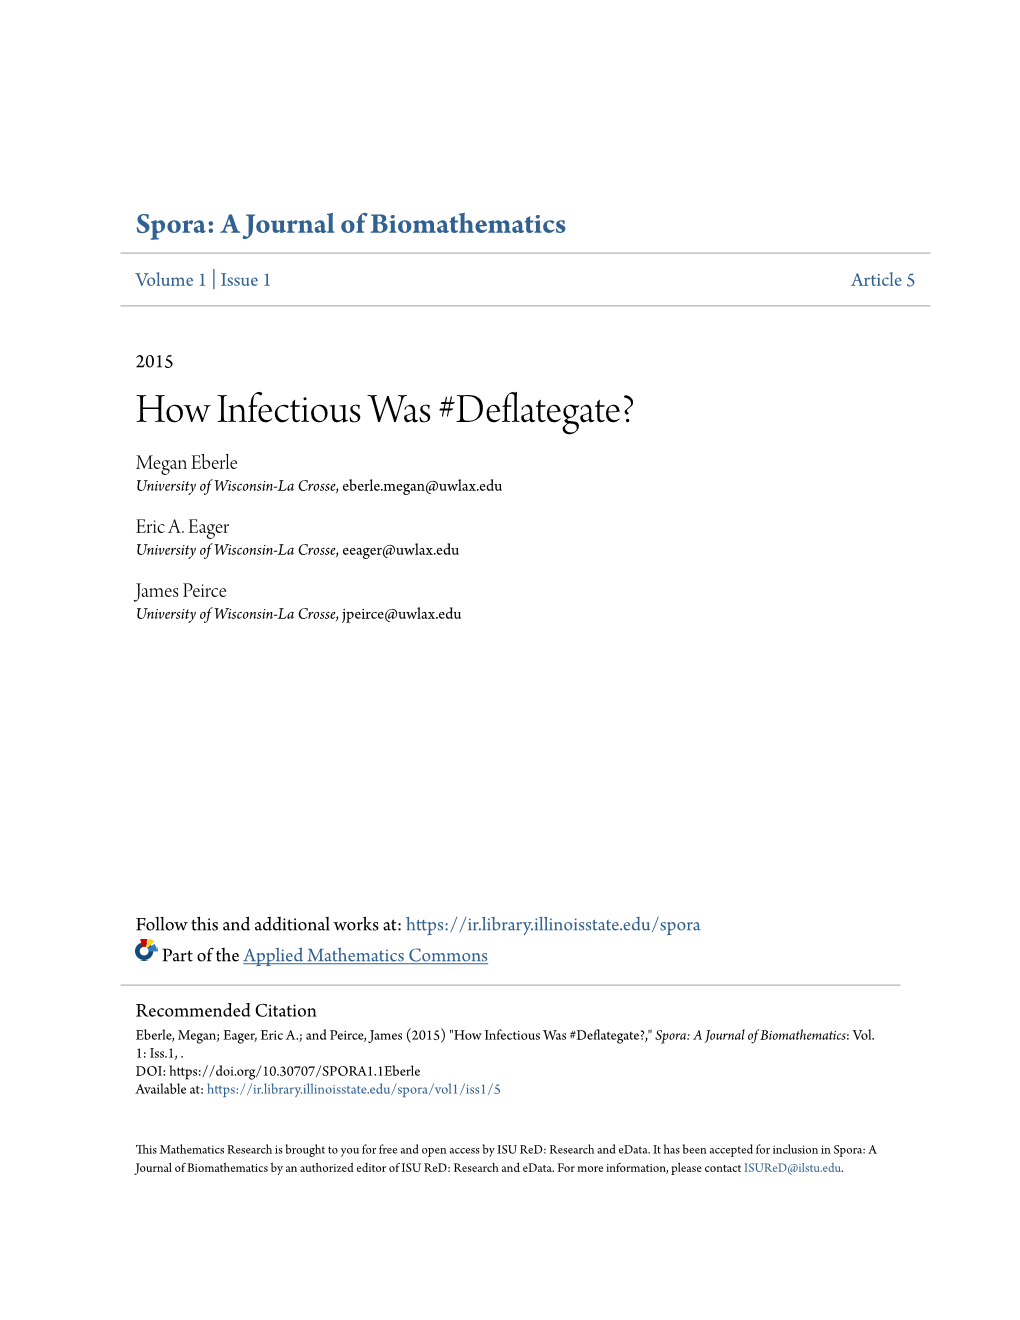 How Infectious Was #Deflategate? Megan Eberle University of Wisconsin-La Crosse, Eberle.Megan@Uwlax.Edu